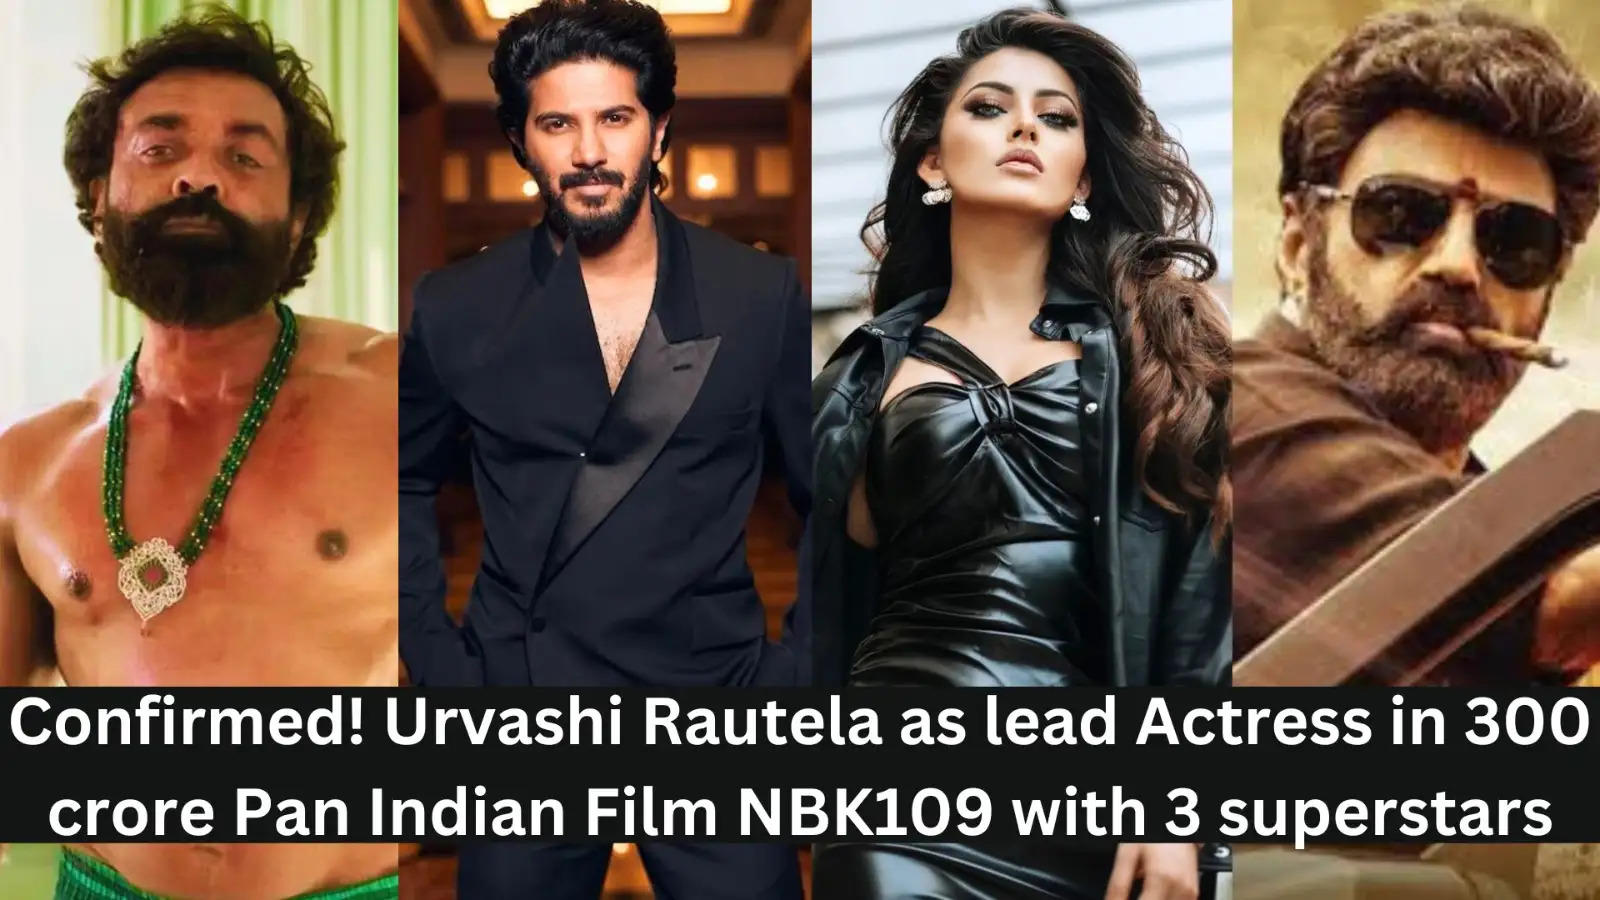 Urvashi Rautela Roped In For 300 Crore Pan Indian Film NBK109 Alongside Bobby Deol, Dulquer Salmaan & Nandamuri Balakrishna